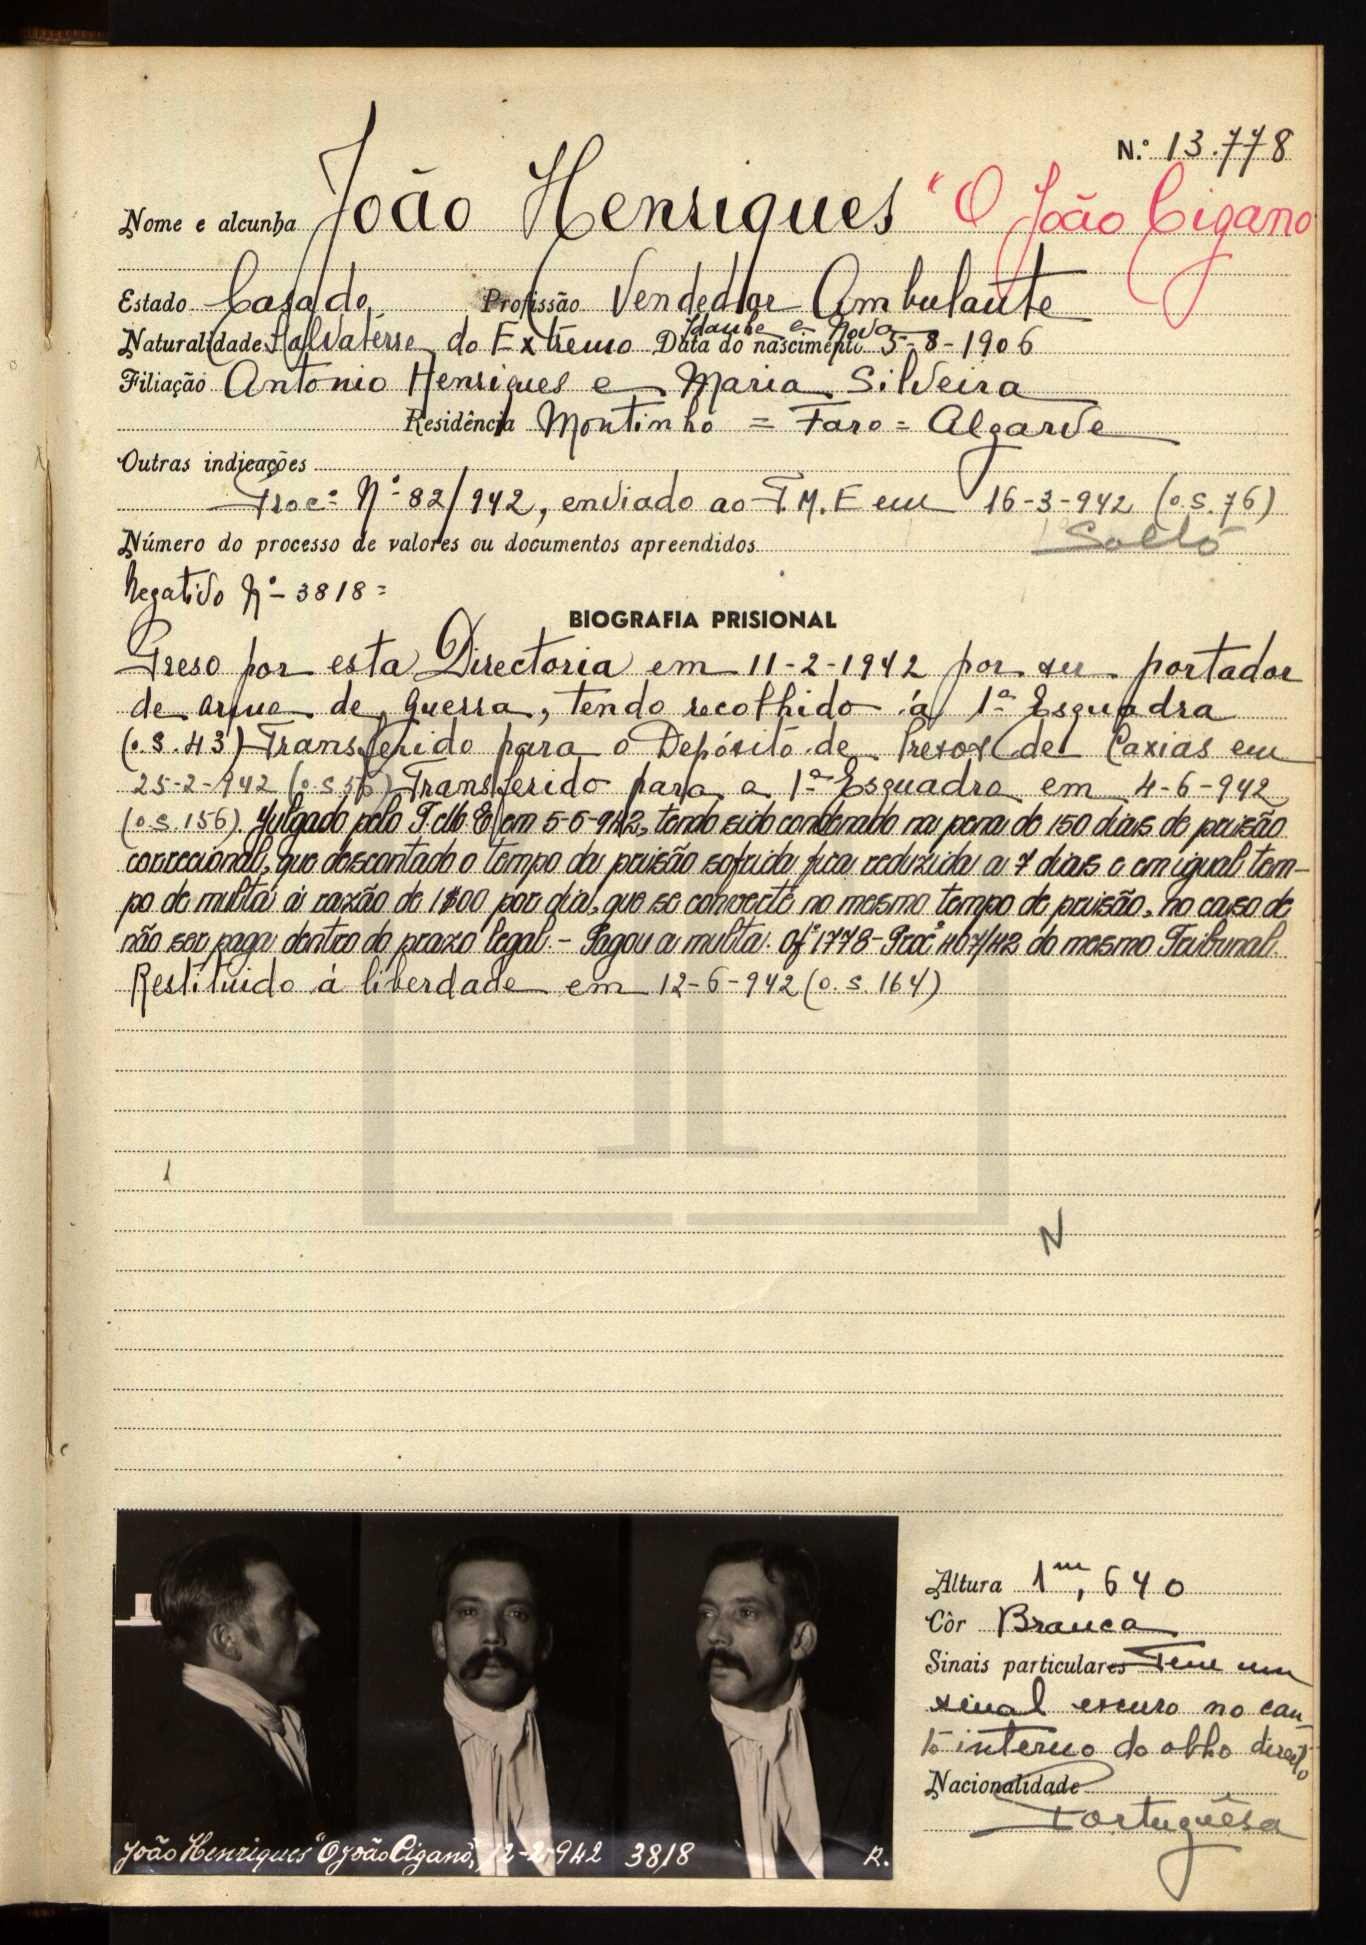  Arquivo Nacional da Torre do Tombo, The criminal record of João Henriques, “O João Cigano” as written in a red pen over the records (1942), available here